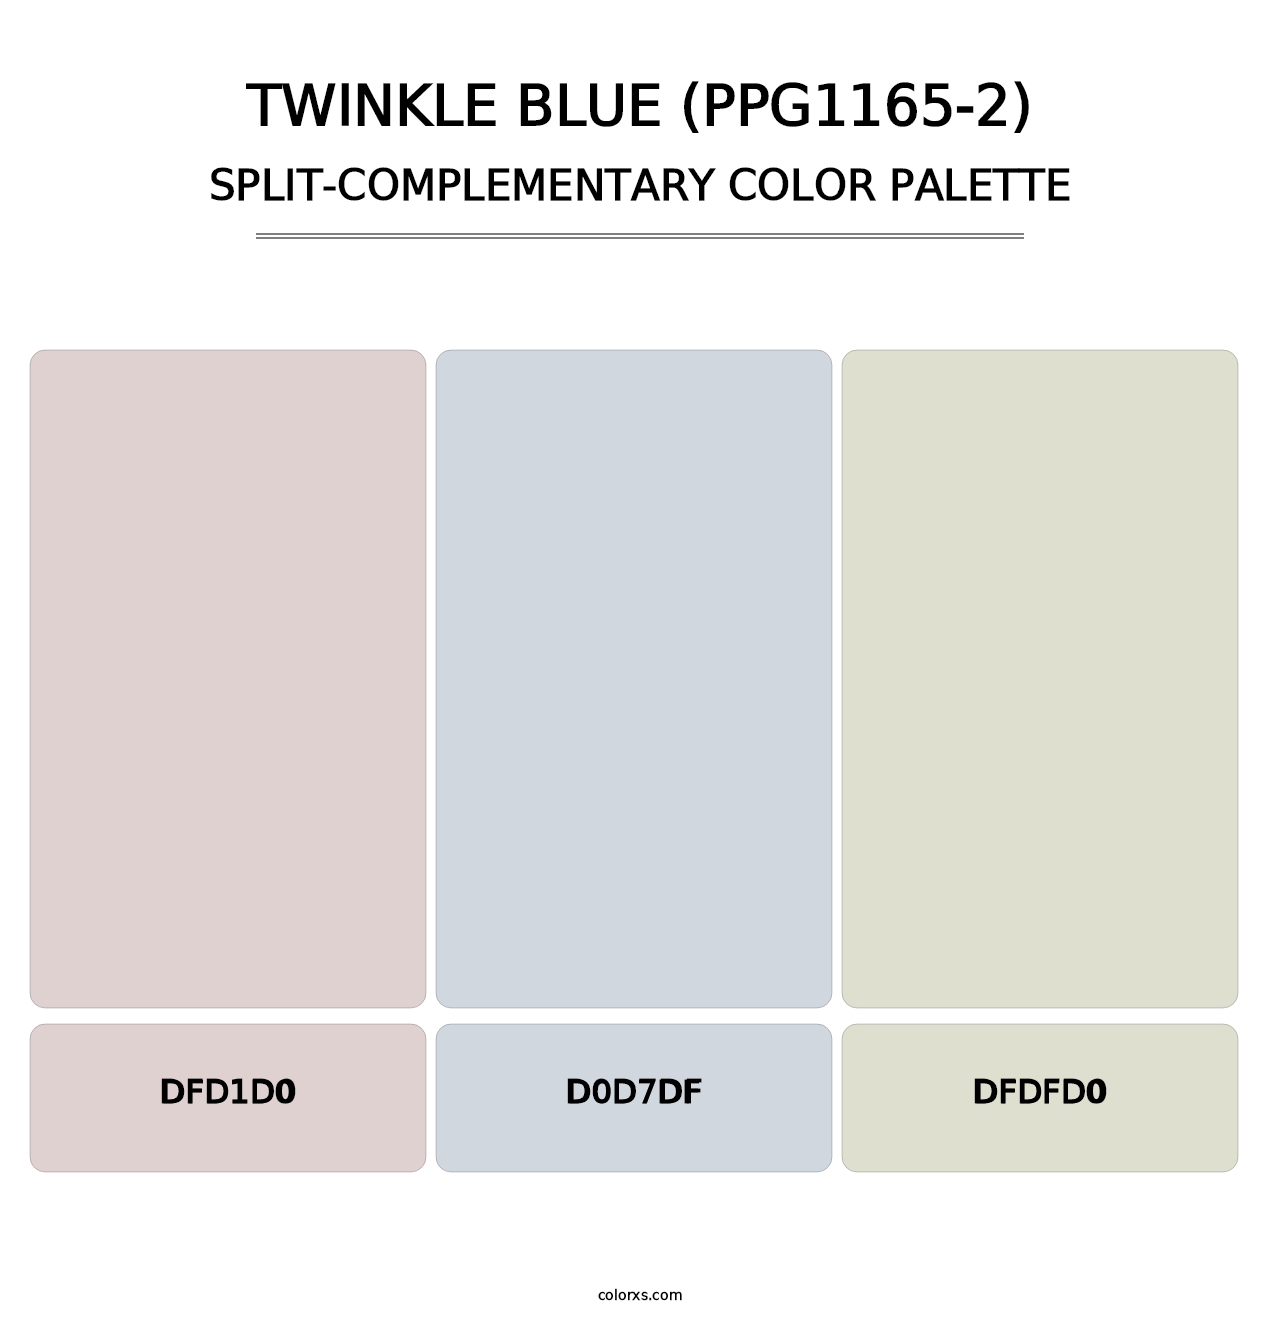 Twinkle Blue (PPG1165-2) - Split-Complementary Color Palette